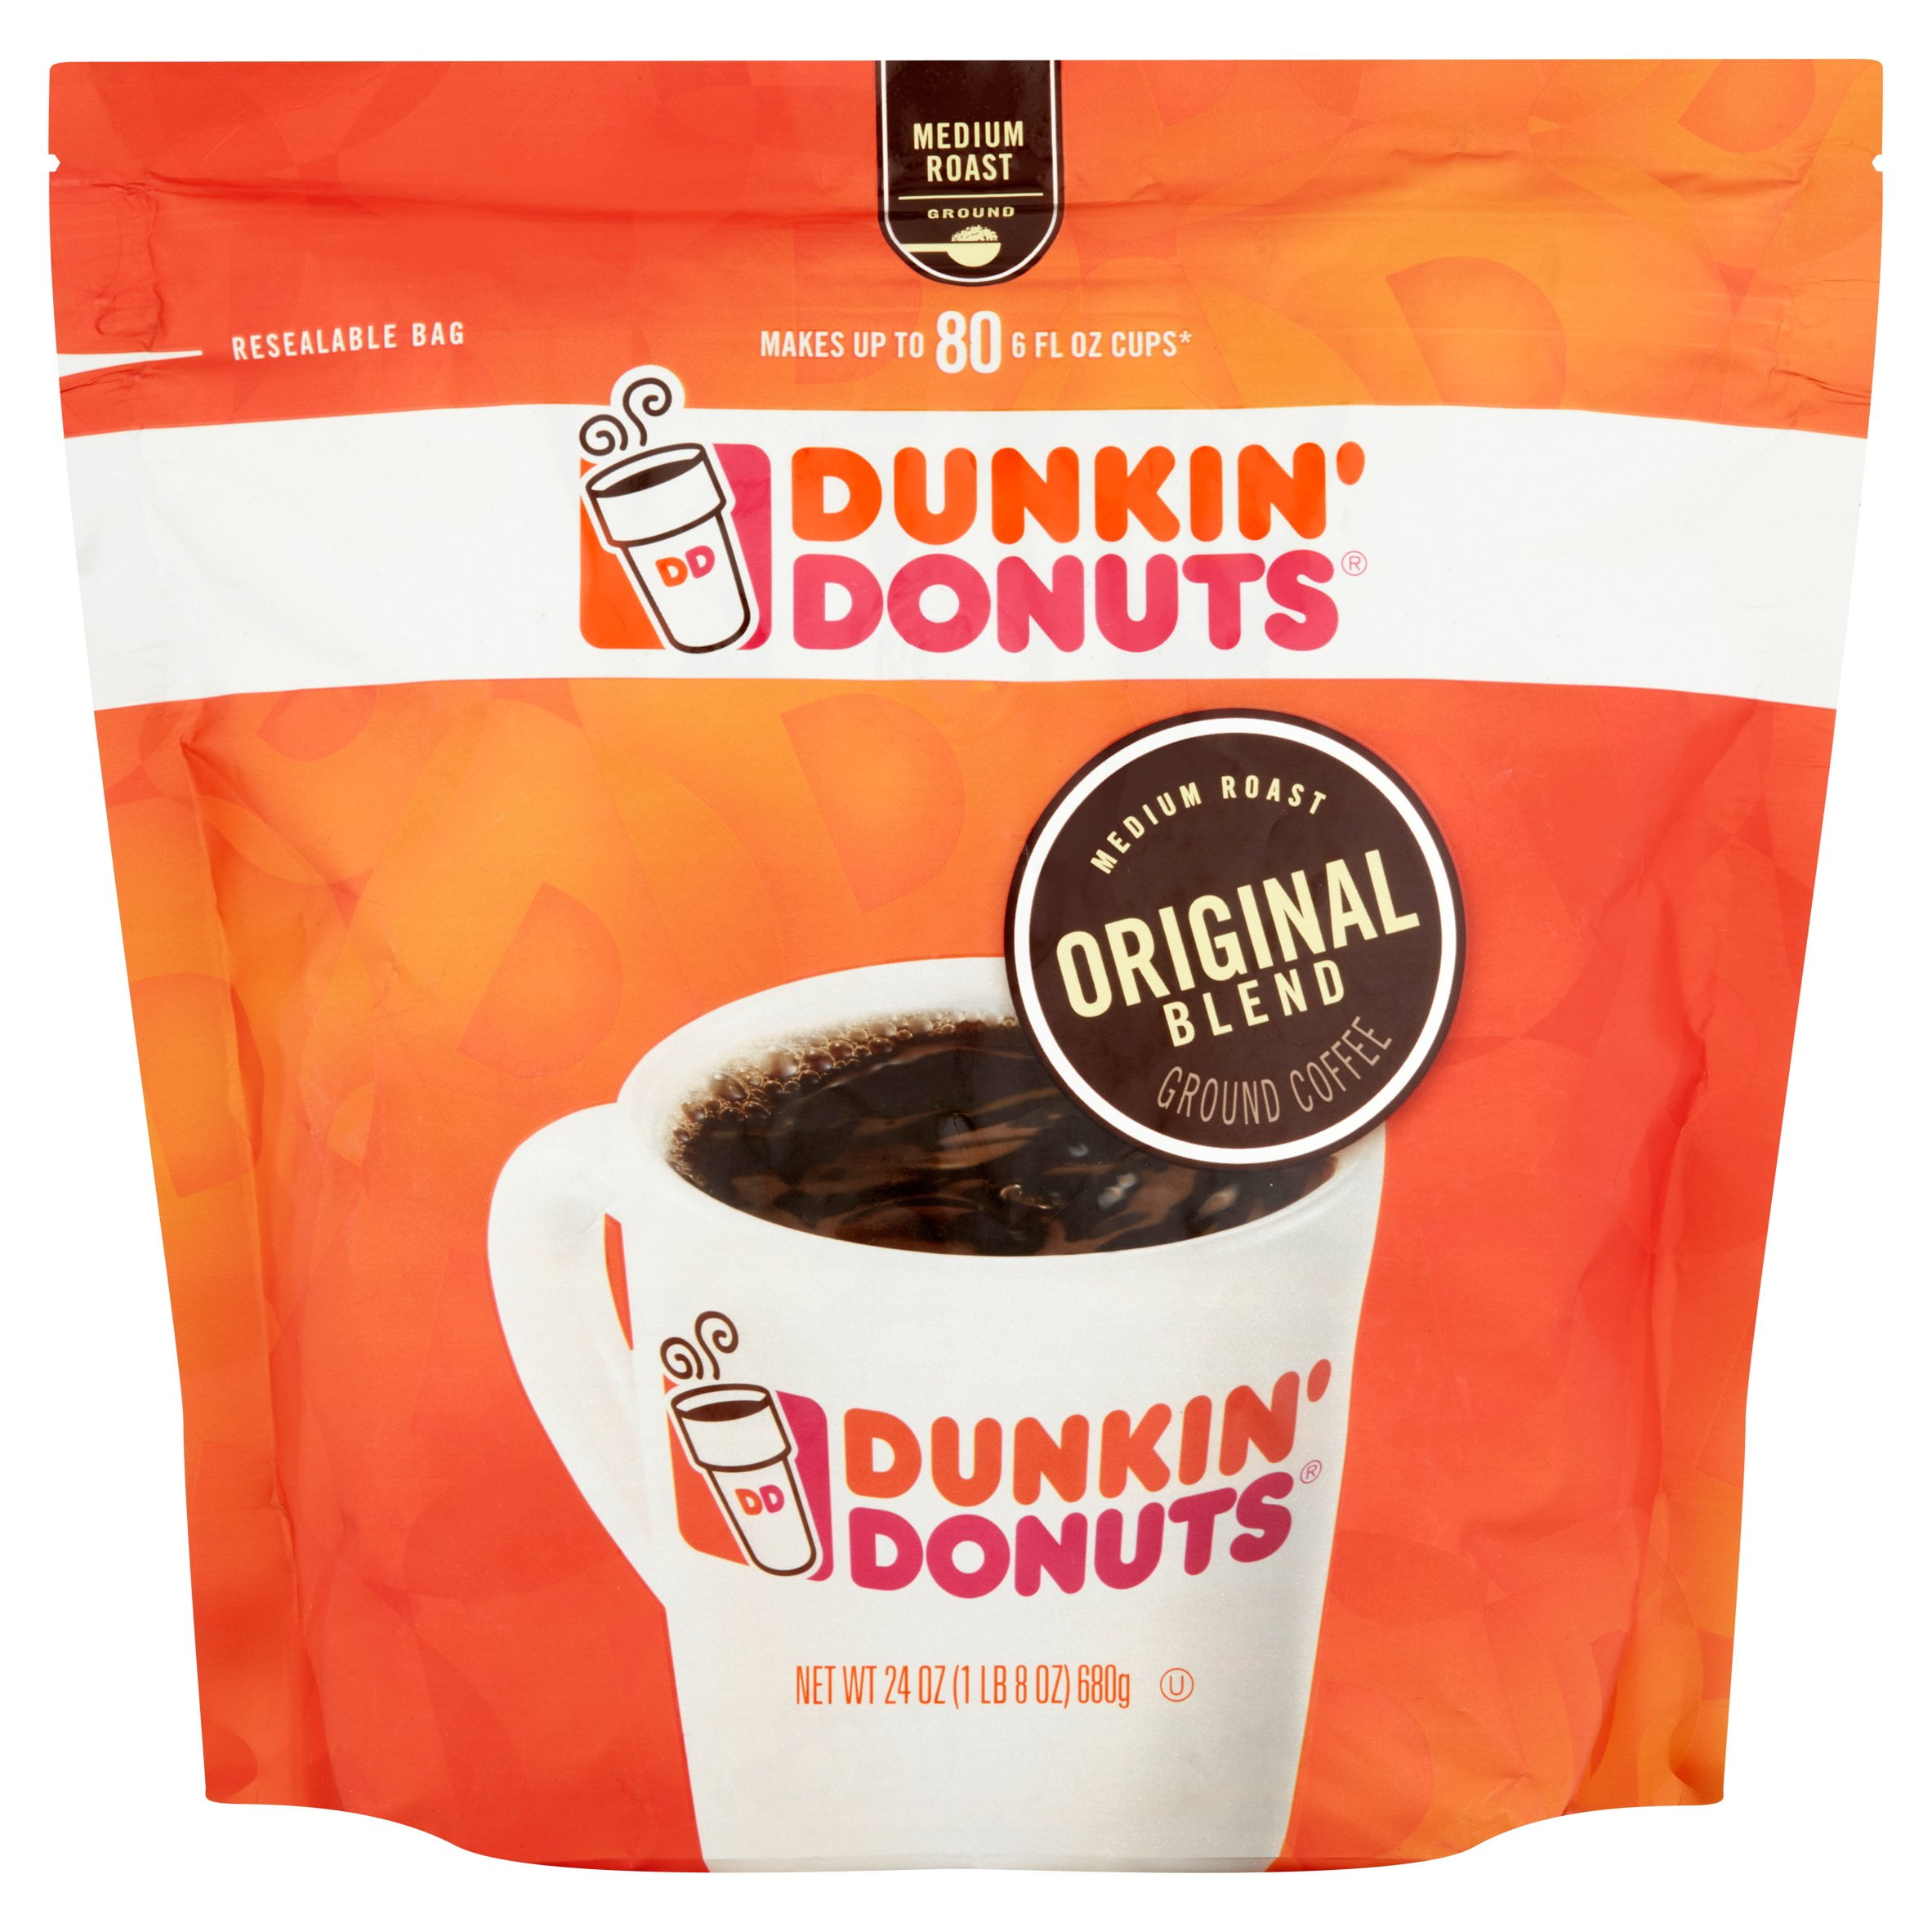 Dunkin' Donuts Roast Medium Blend Original Ground Coffee 24 oz